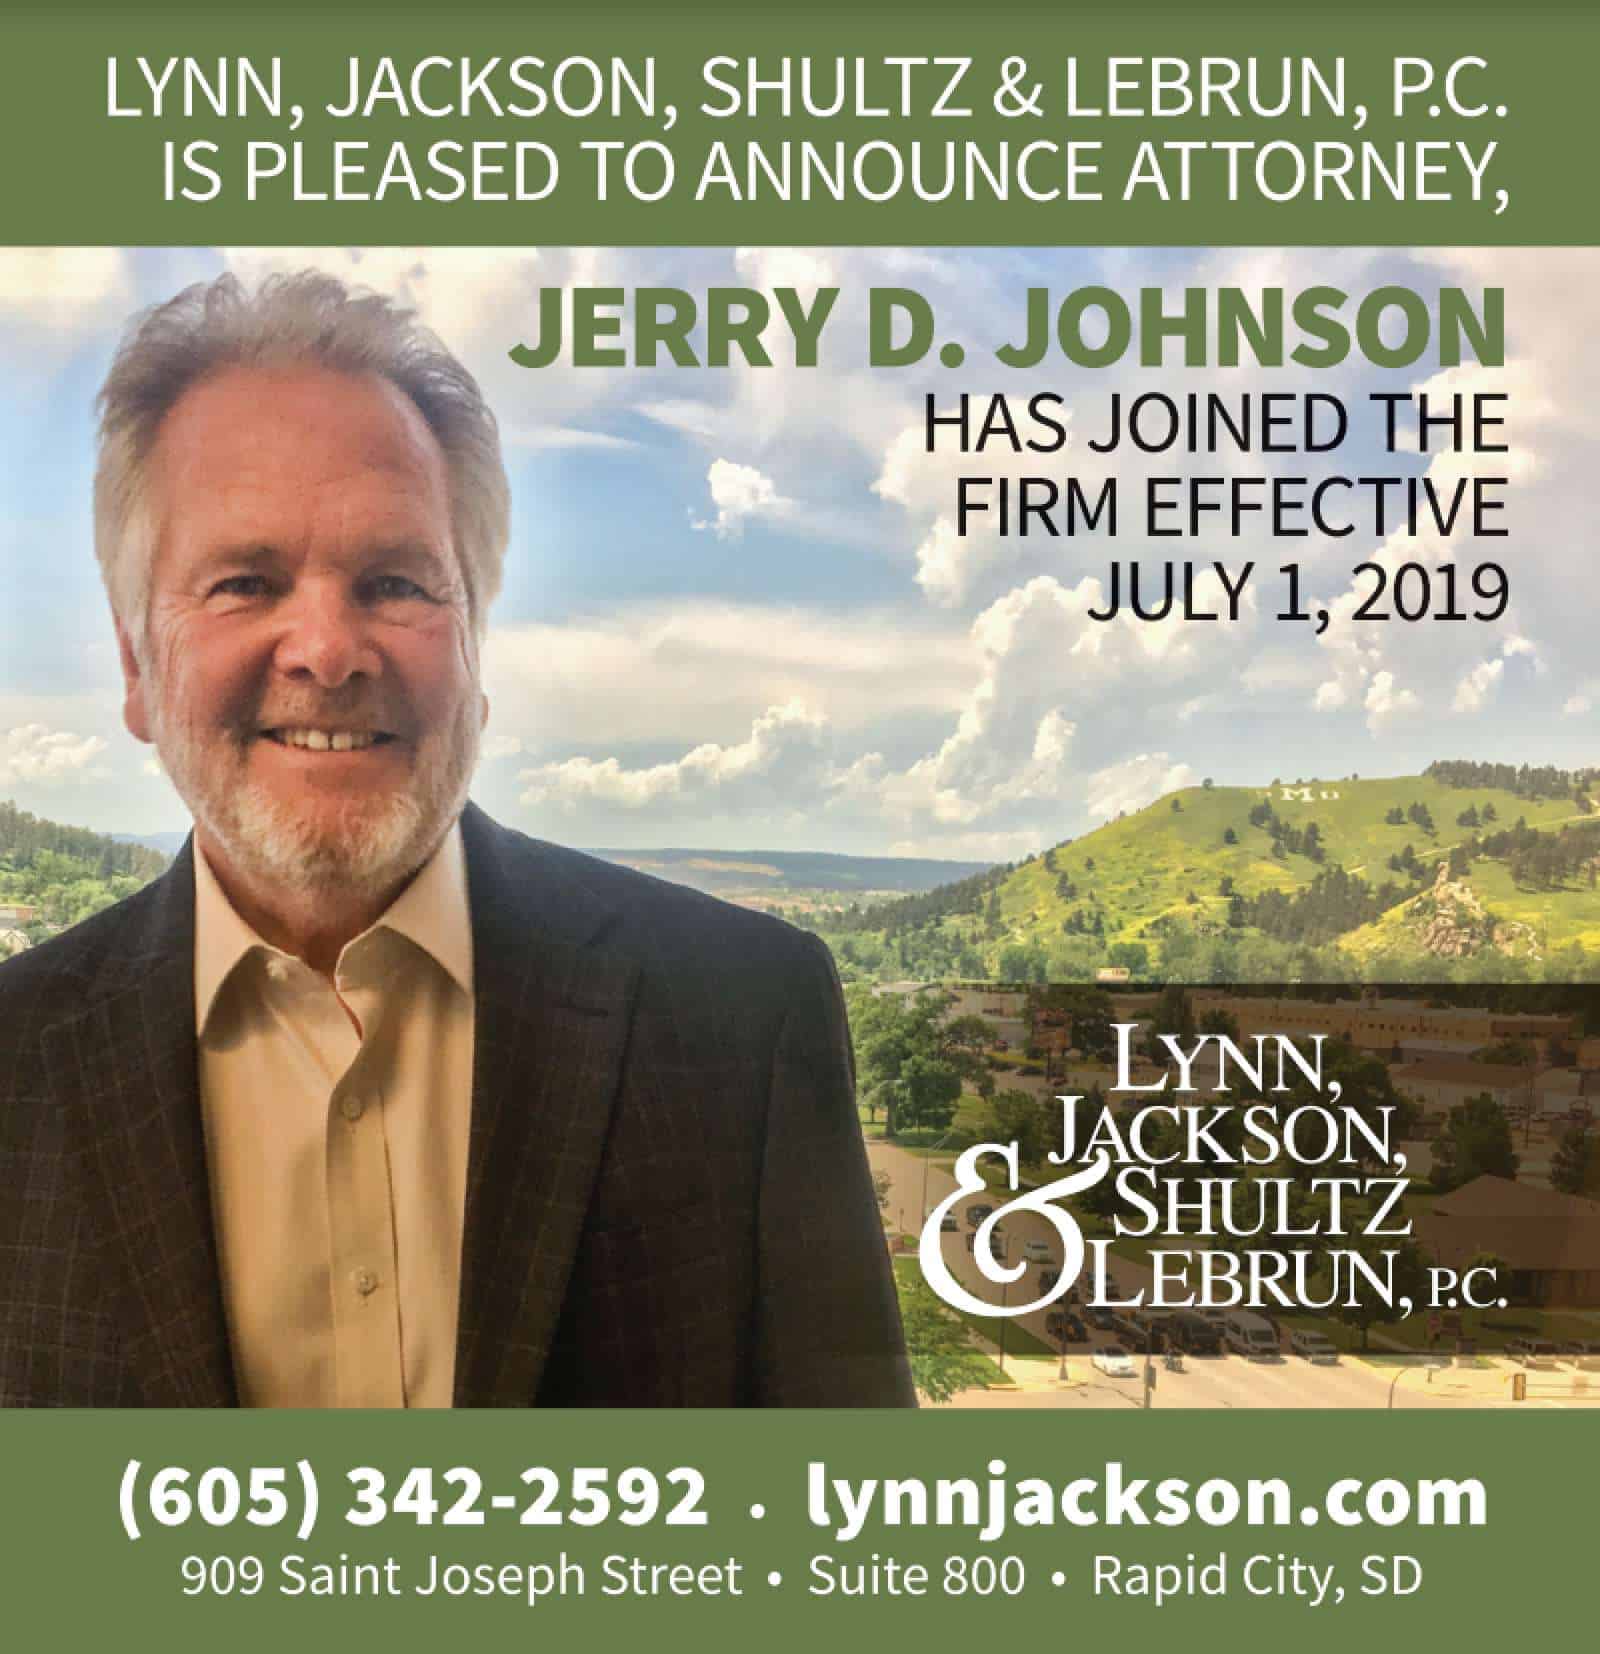 Jerry D. Johnson to join Lynn Jackson